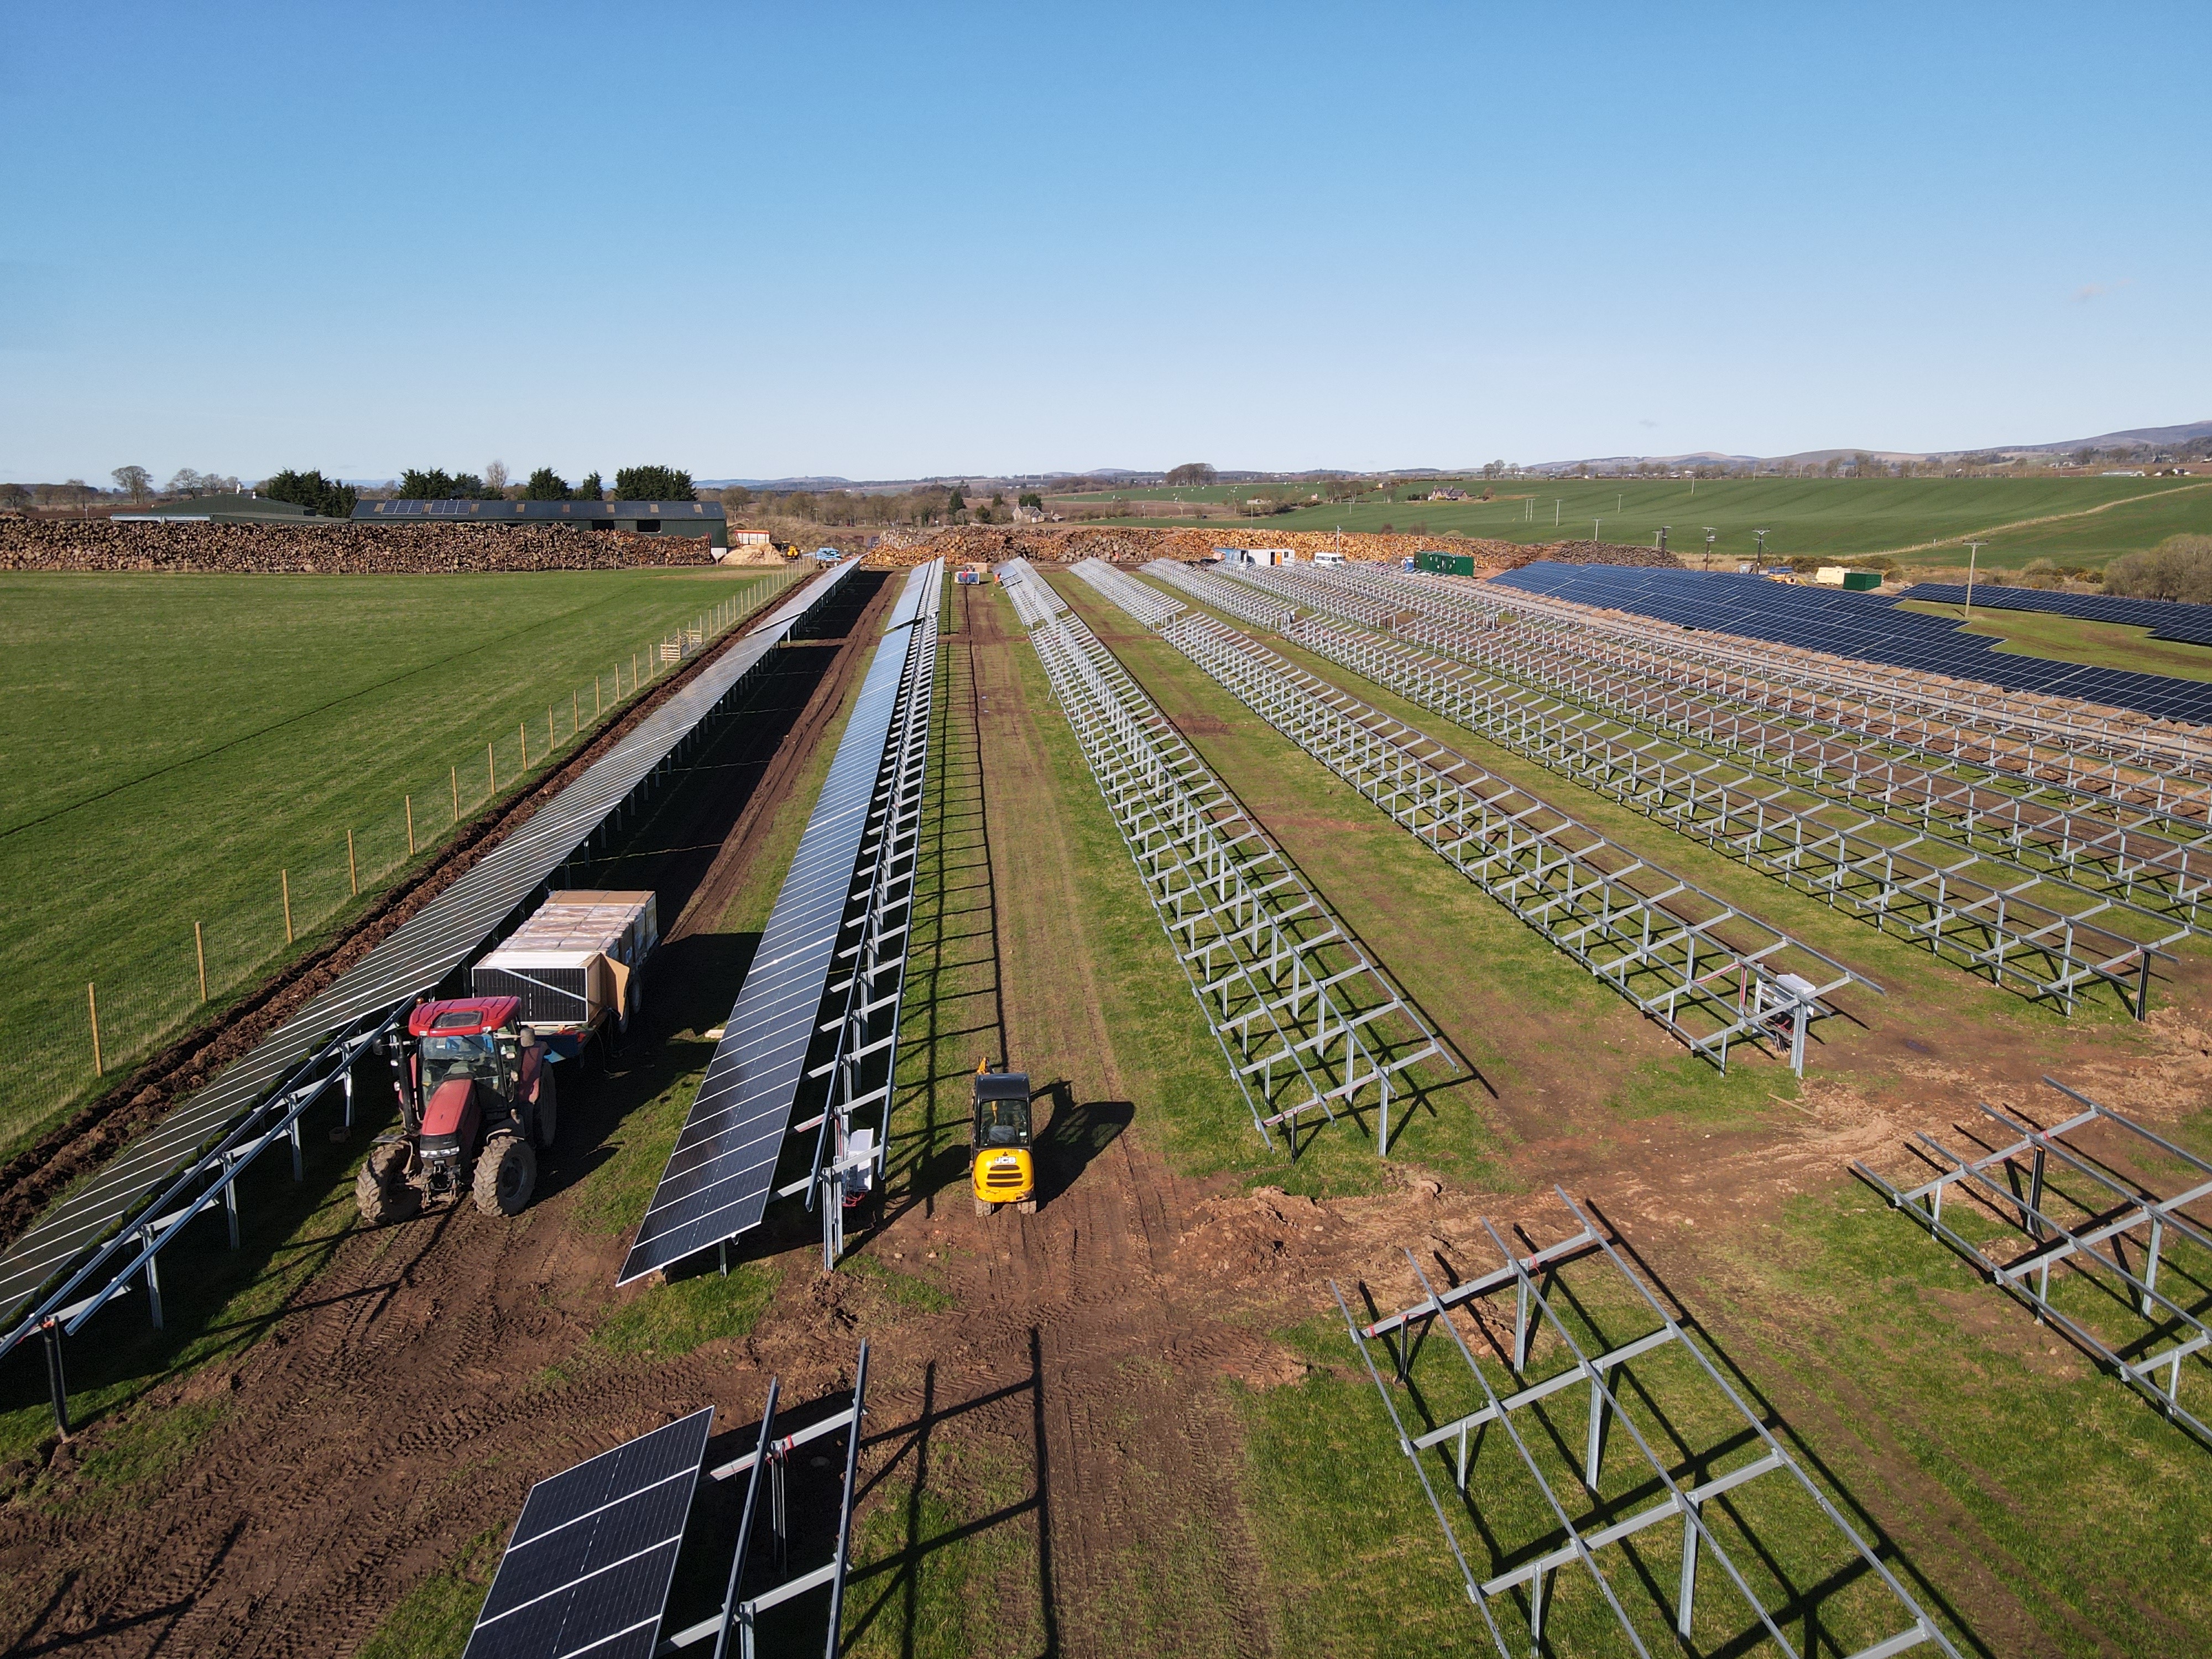 Lombard provides £2m funding for Forfar solar park